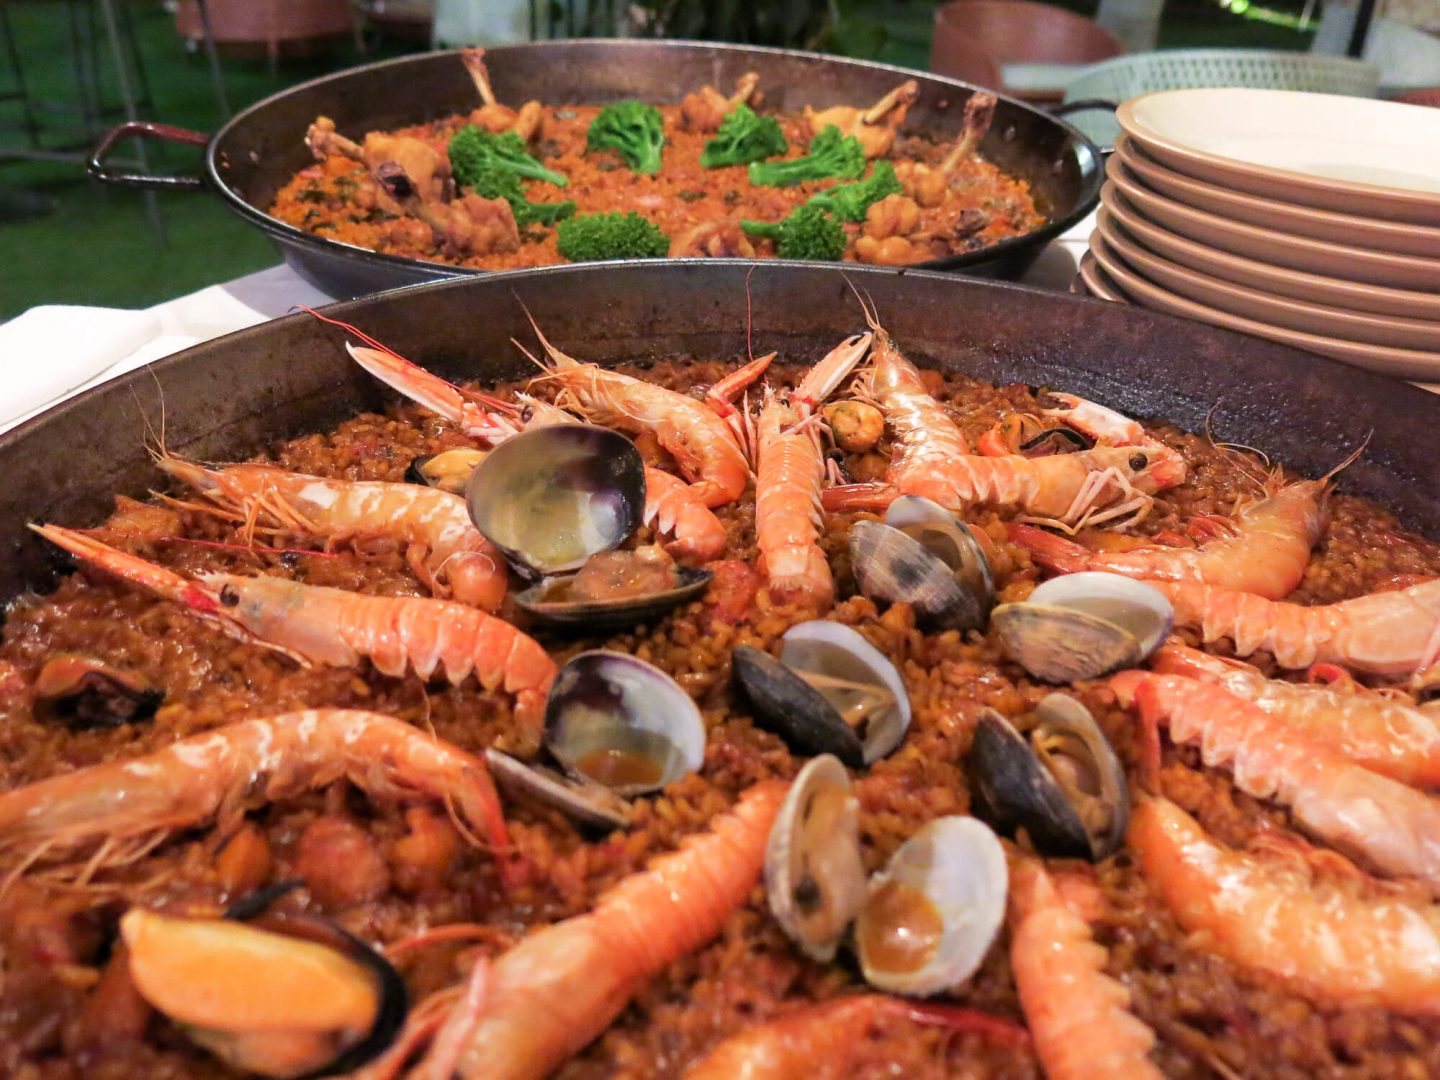 Food from Spiler beach club at Kempinski Hotel Bahía, Spain.